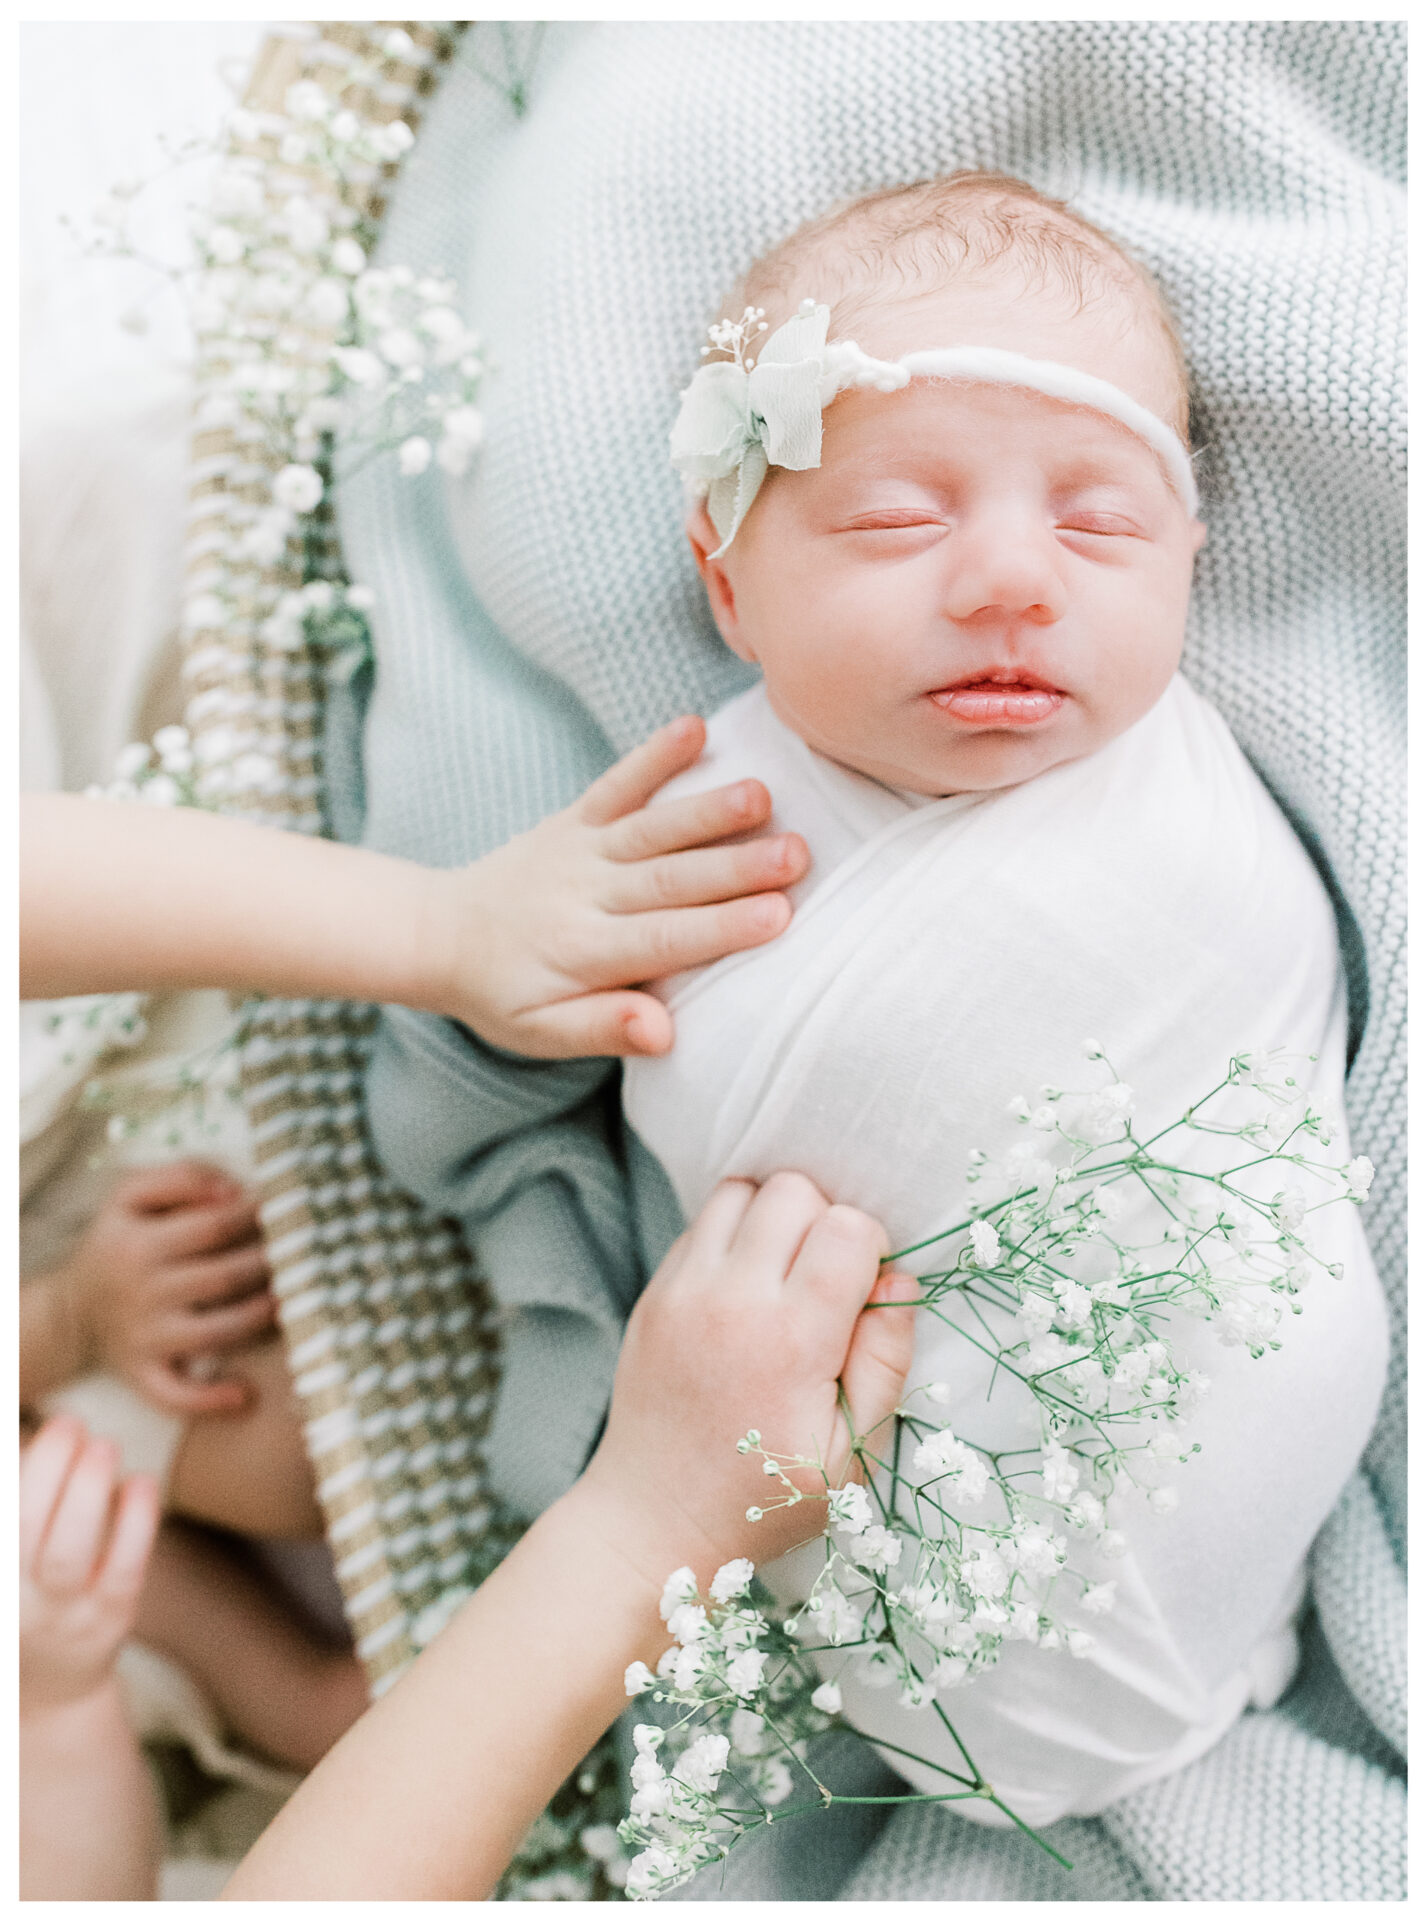 Winter Freire Photography | Newborn Studio Session | Organic Timeless Elegant lifestyle newborn session with family | Cincinnati, Dayton, Columbus Ohio and surrounding areas